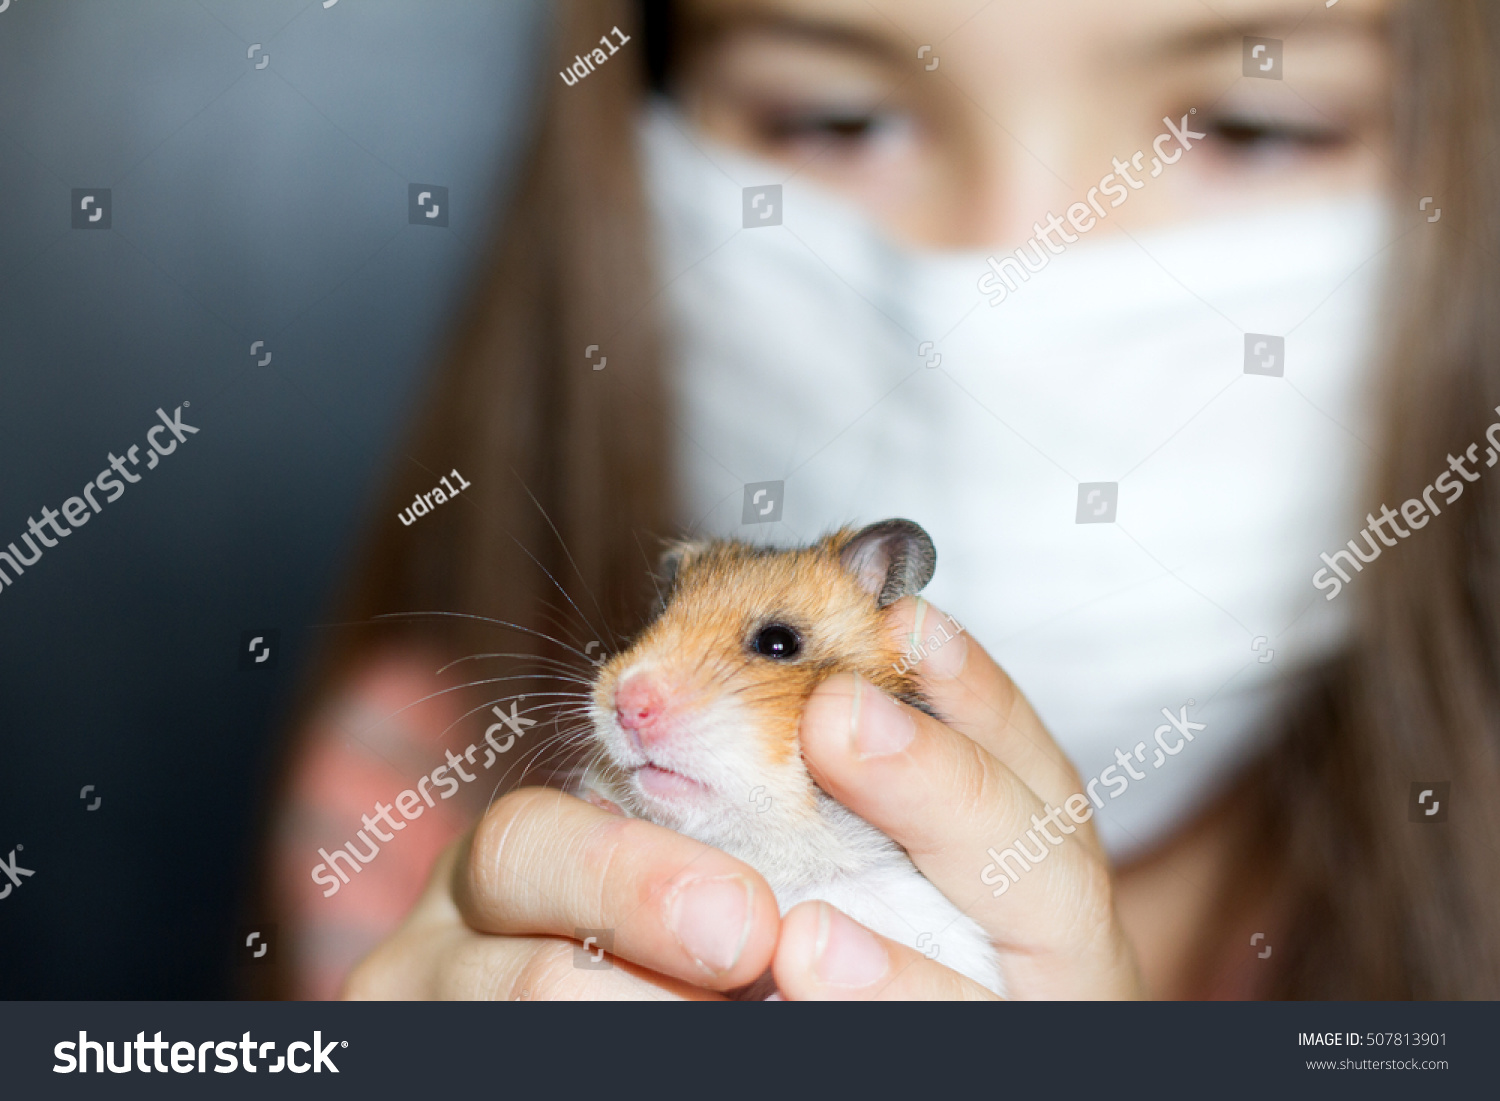 Girl Medical Mask Hamster Allergy Concept Stock Photo Edit Now 507813901